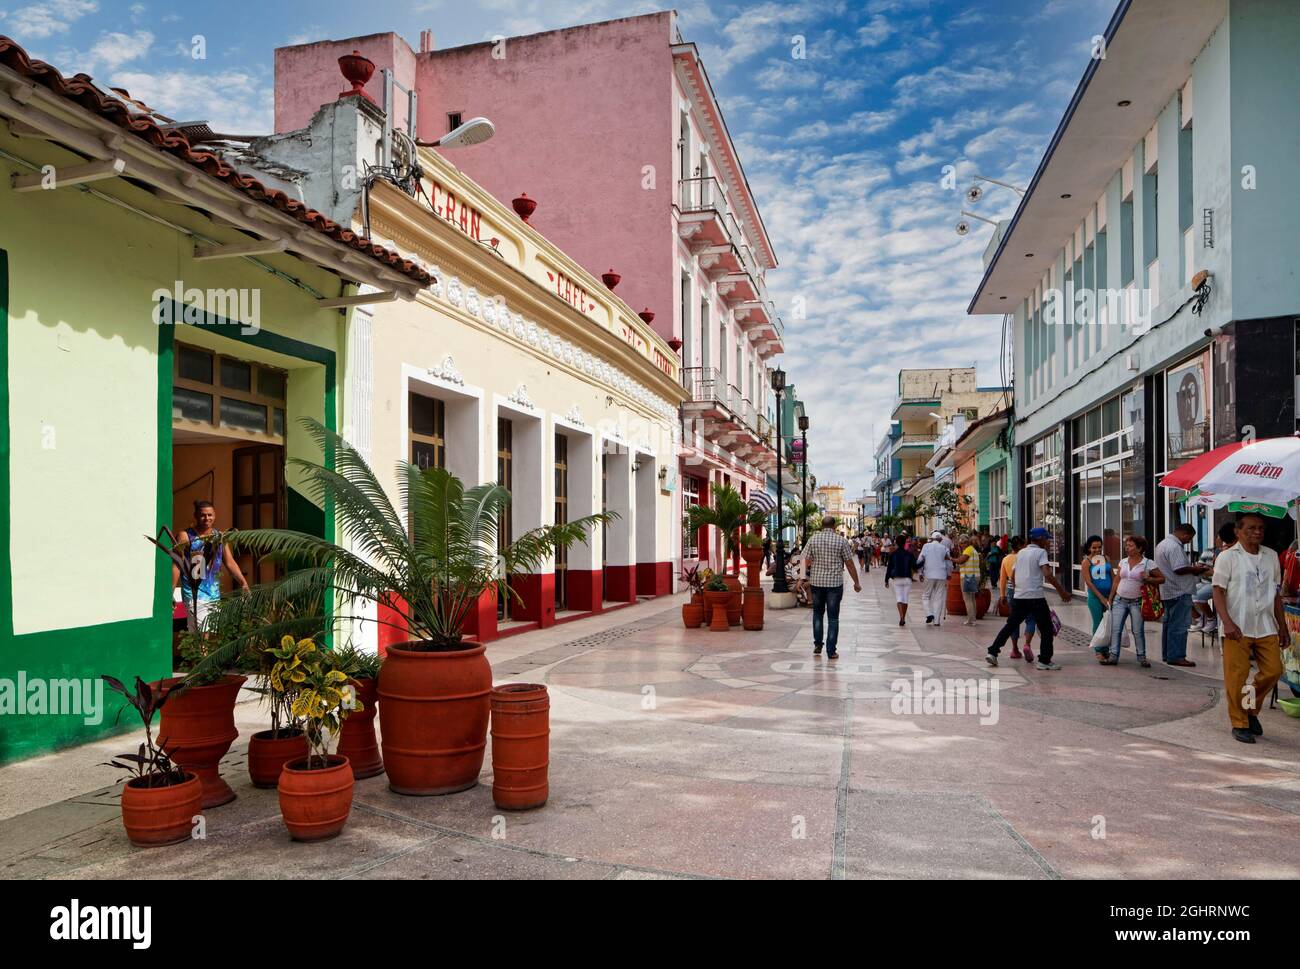 Straßenszene, Geschäftsstraße, viele Menschen, Kubaner, Sancti Spiritus, Zentralkuba, Provinz Sancti Spiritus, Karibik, Kuba Stockfoto